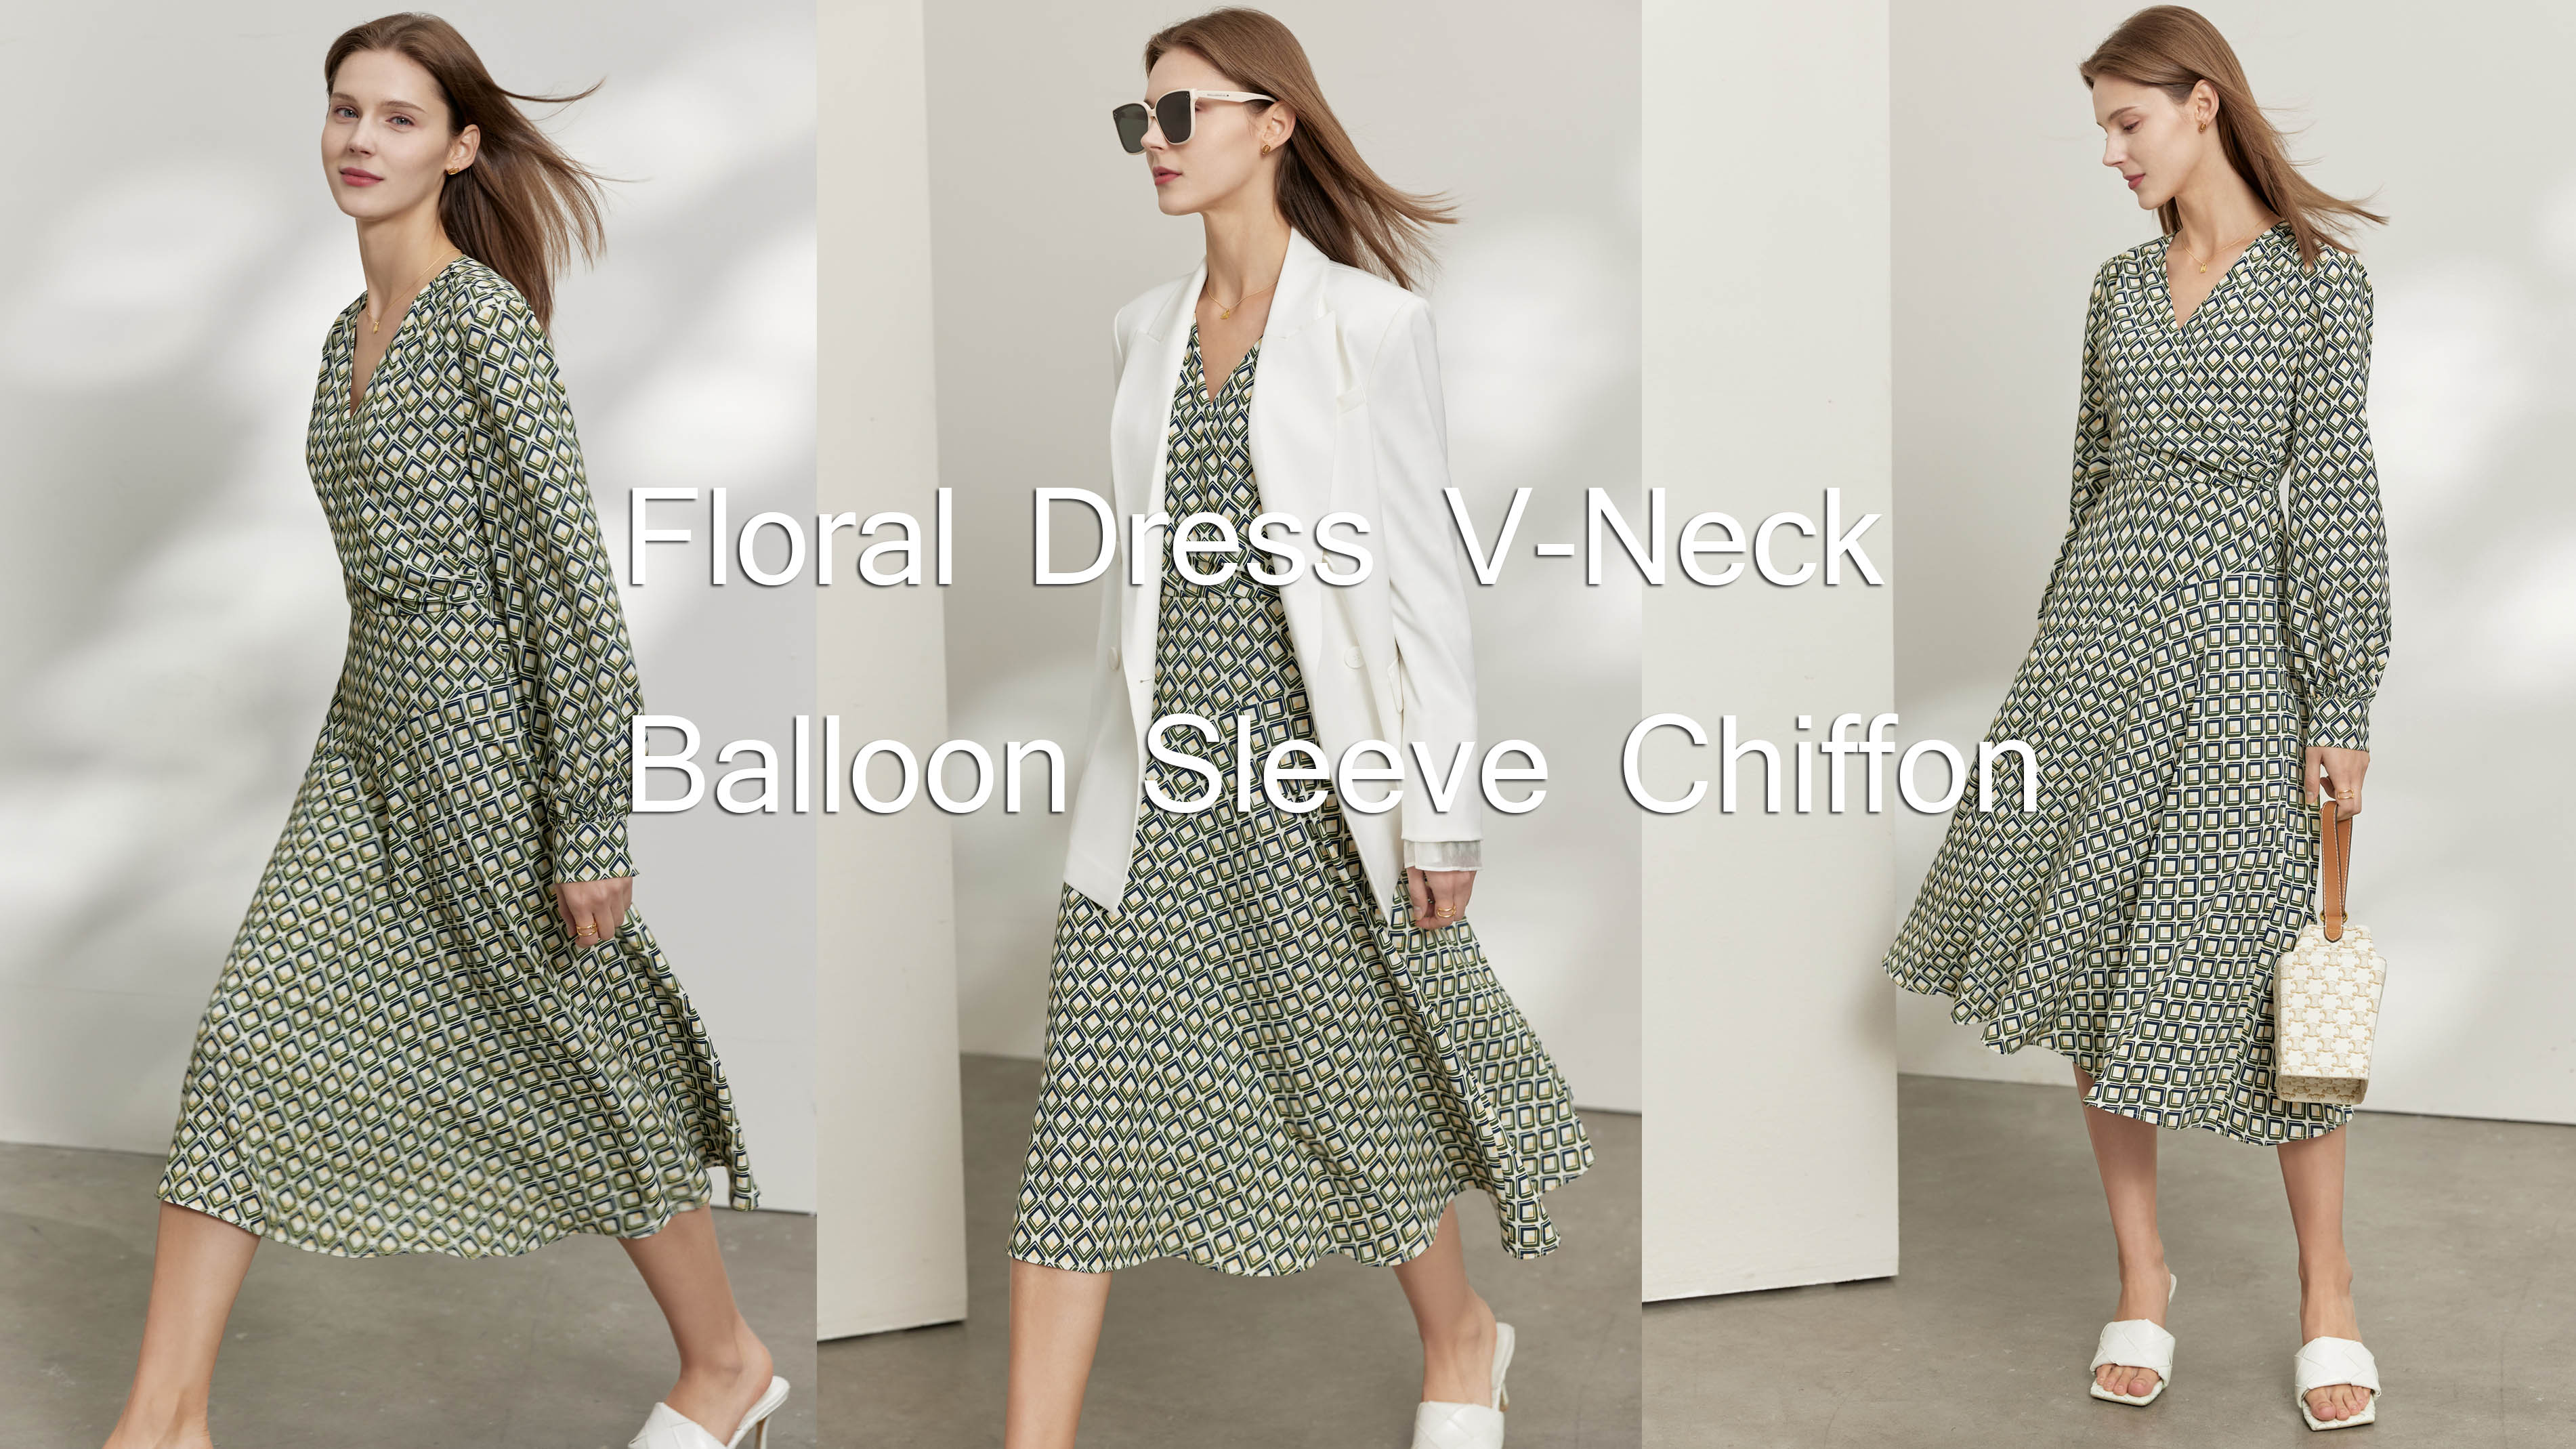 गुणस्तरीय फ्लोरल ड्रेस V-नेक बेलुन स्लिभ शिफन निर्माता |Auschallink